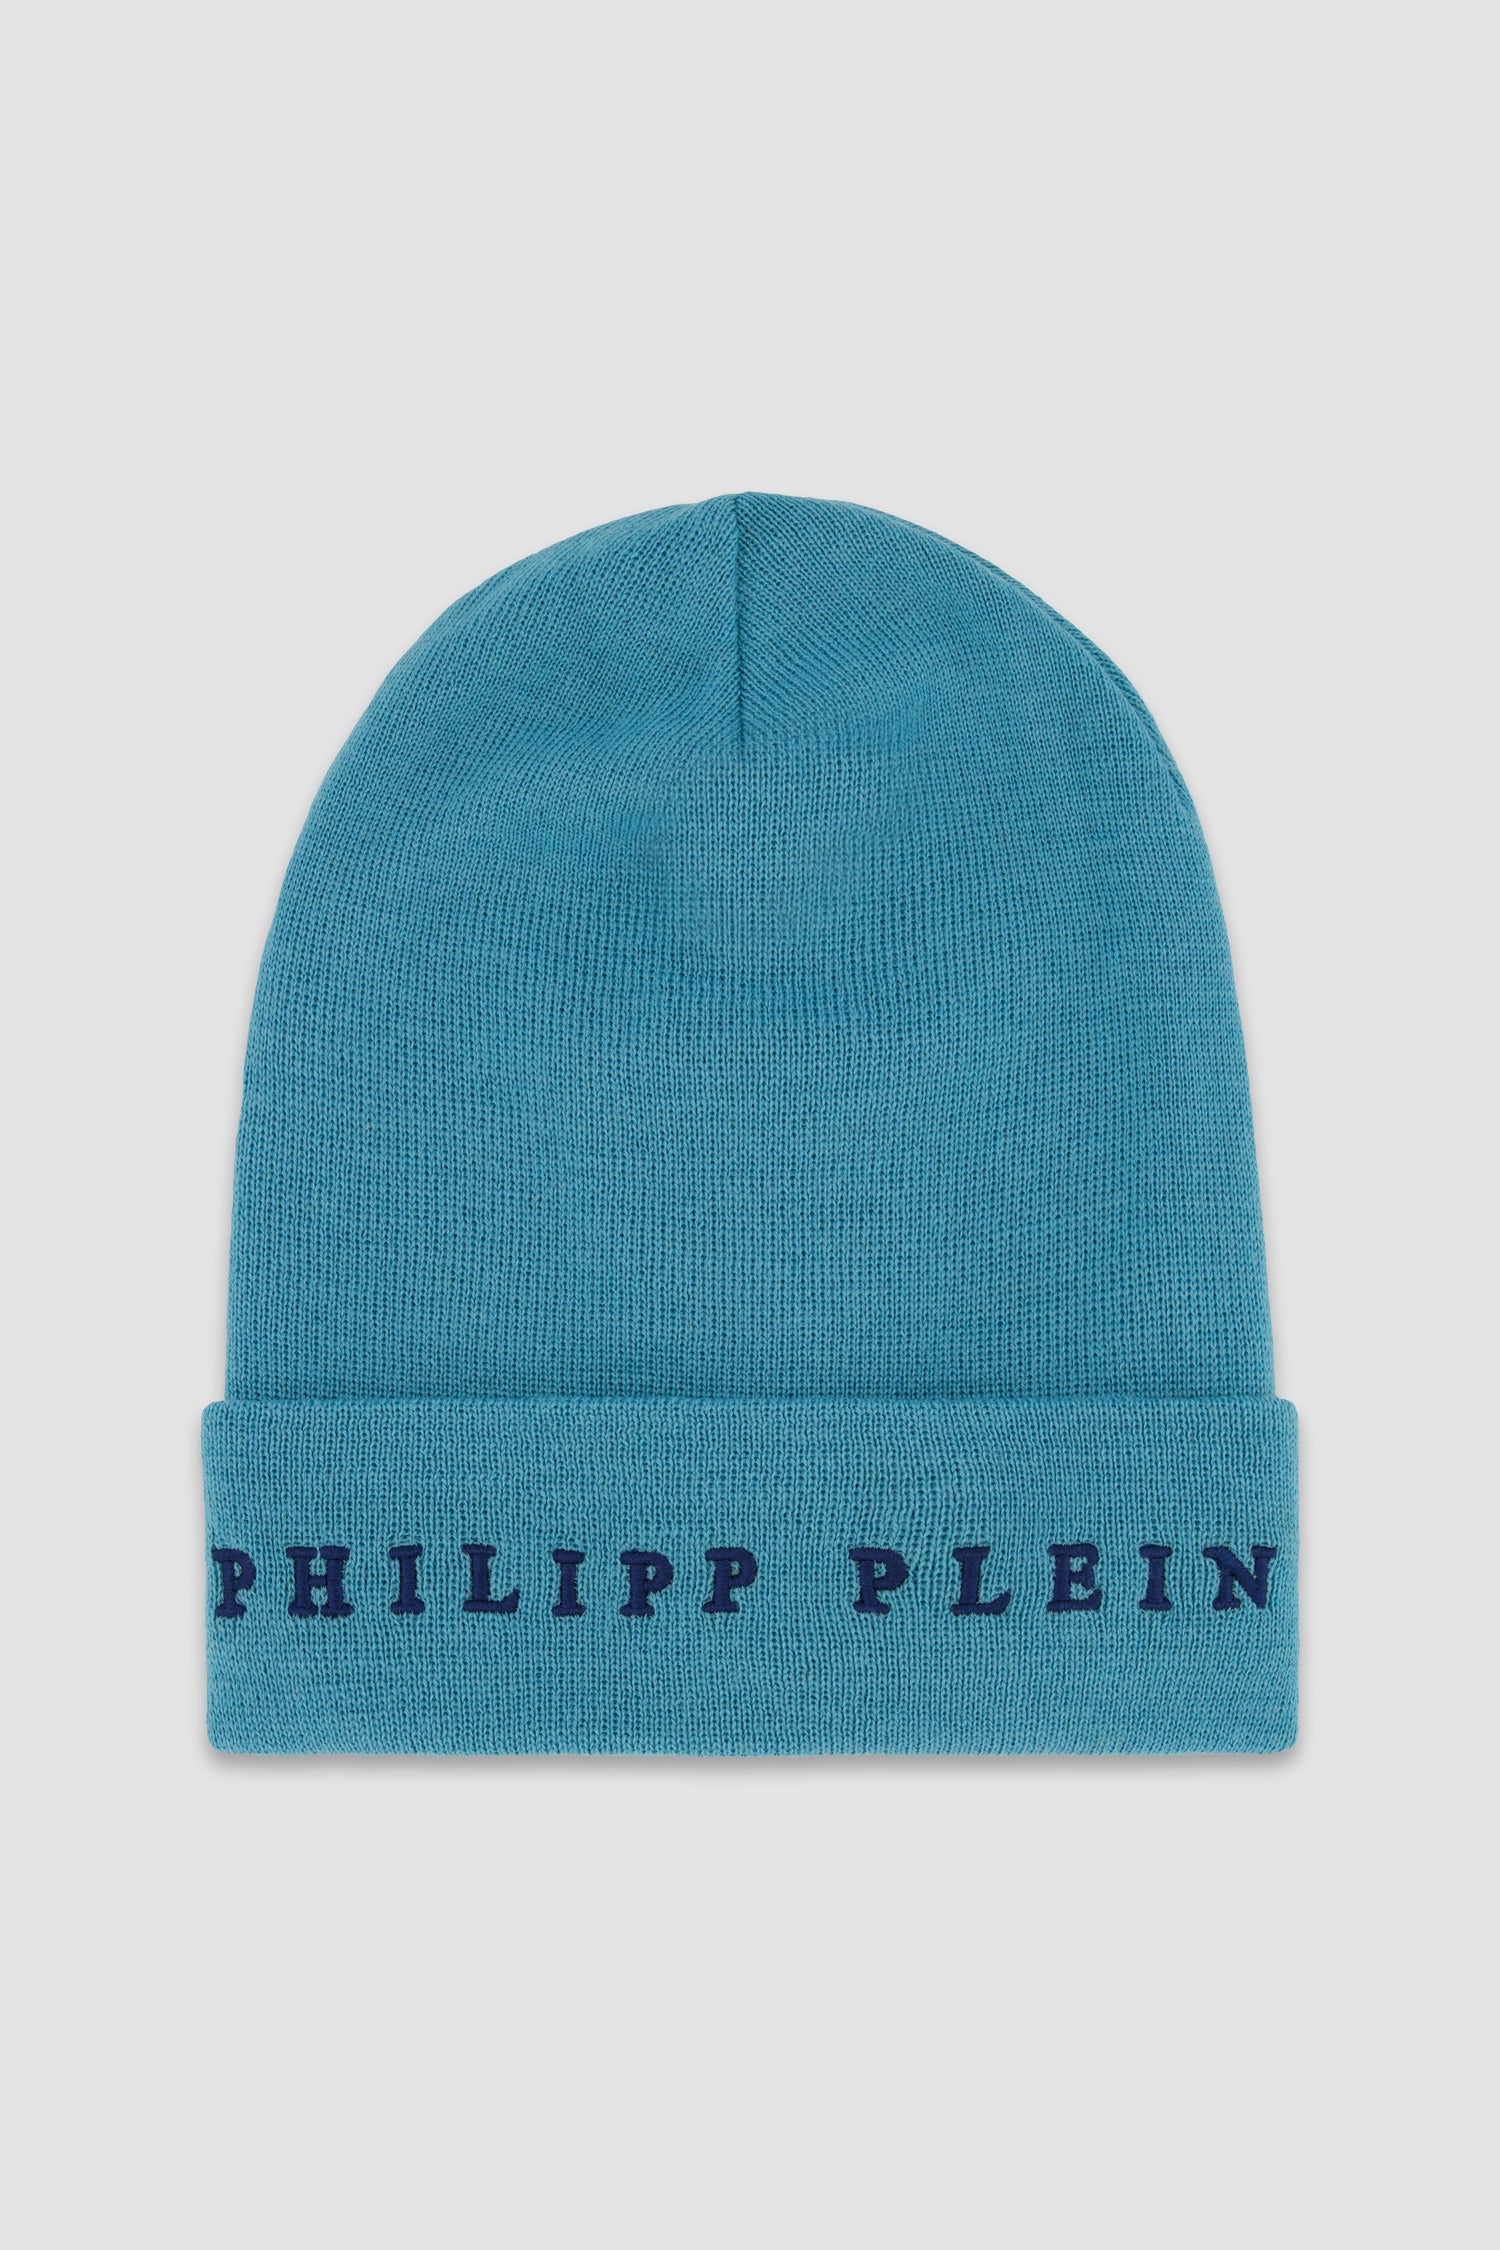 Philipp Plein Turquoise Hat